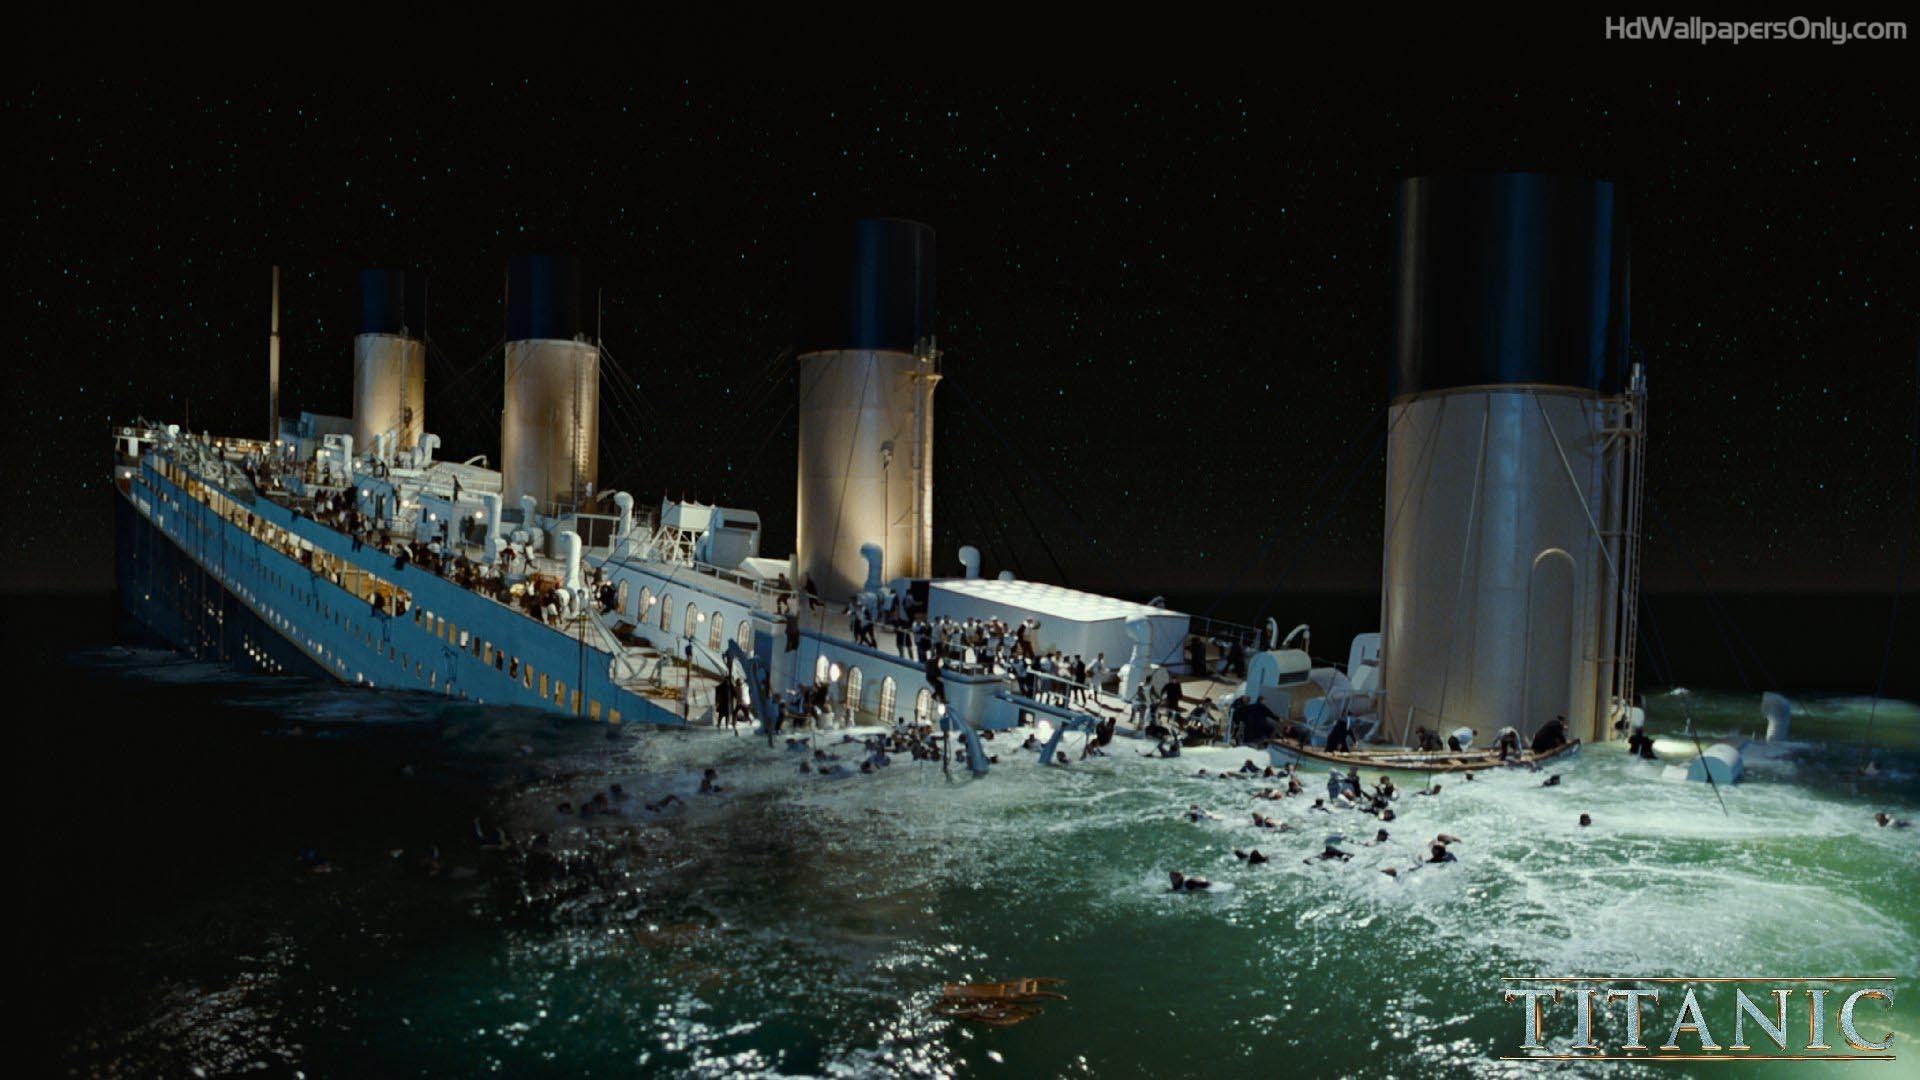 Titanic Ship Images - Free Download on Freepik